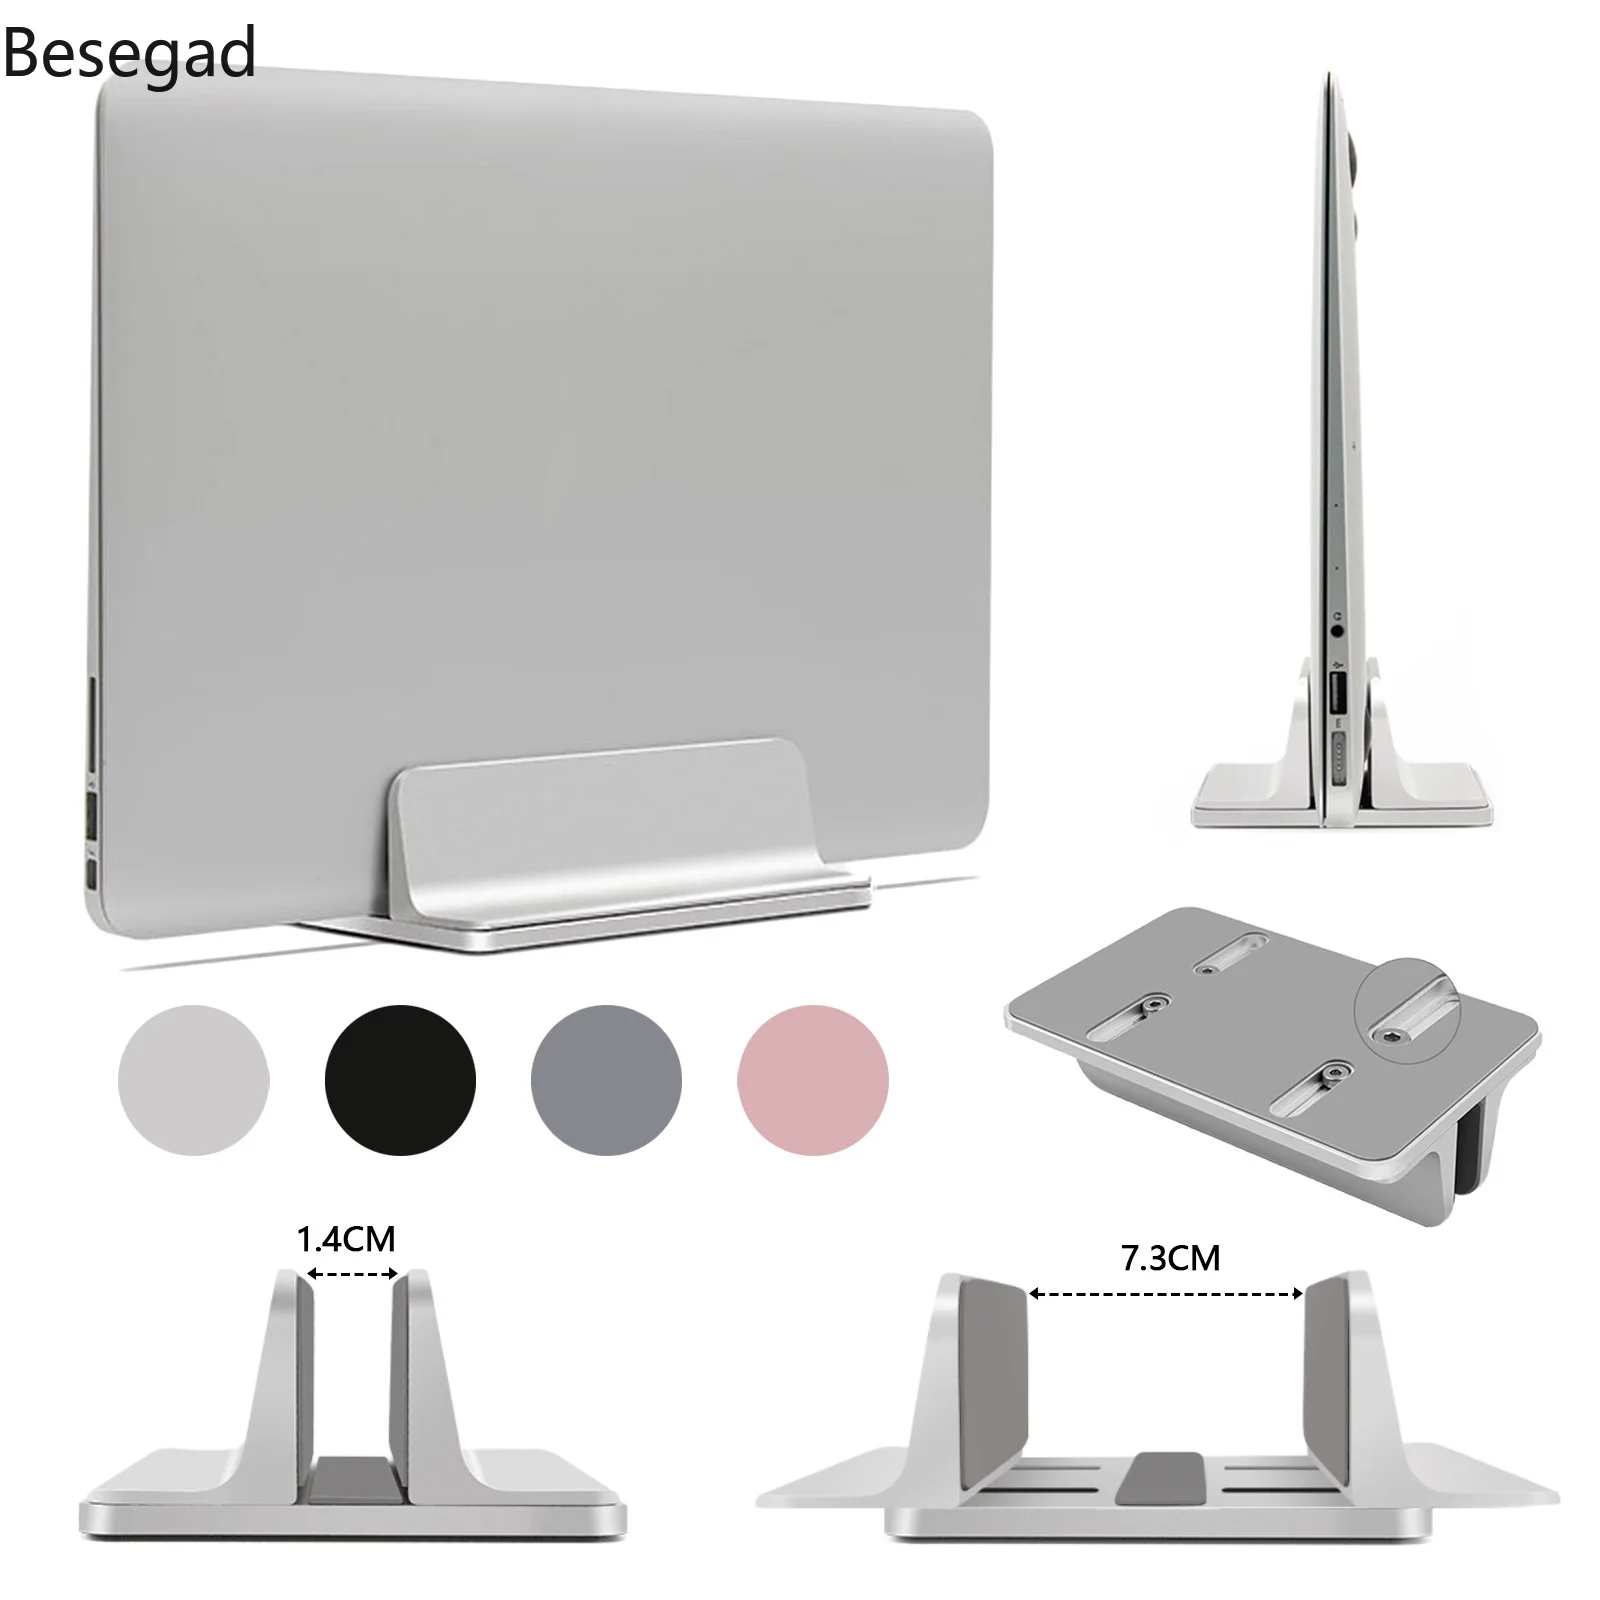 Besegad Aluminium Adjustable Vertical Desktop Laptop Holder Stand Bracket for Apple MacBook Pro Mac Book Lenovo YOGA Notebook